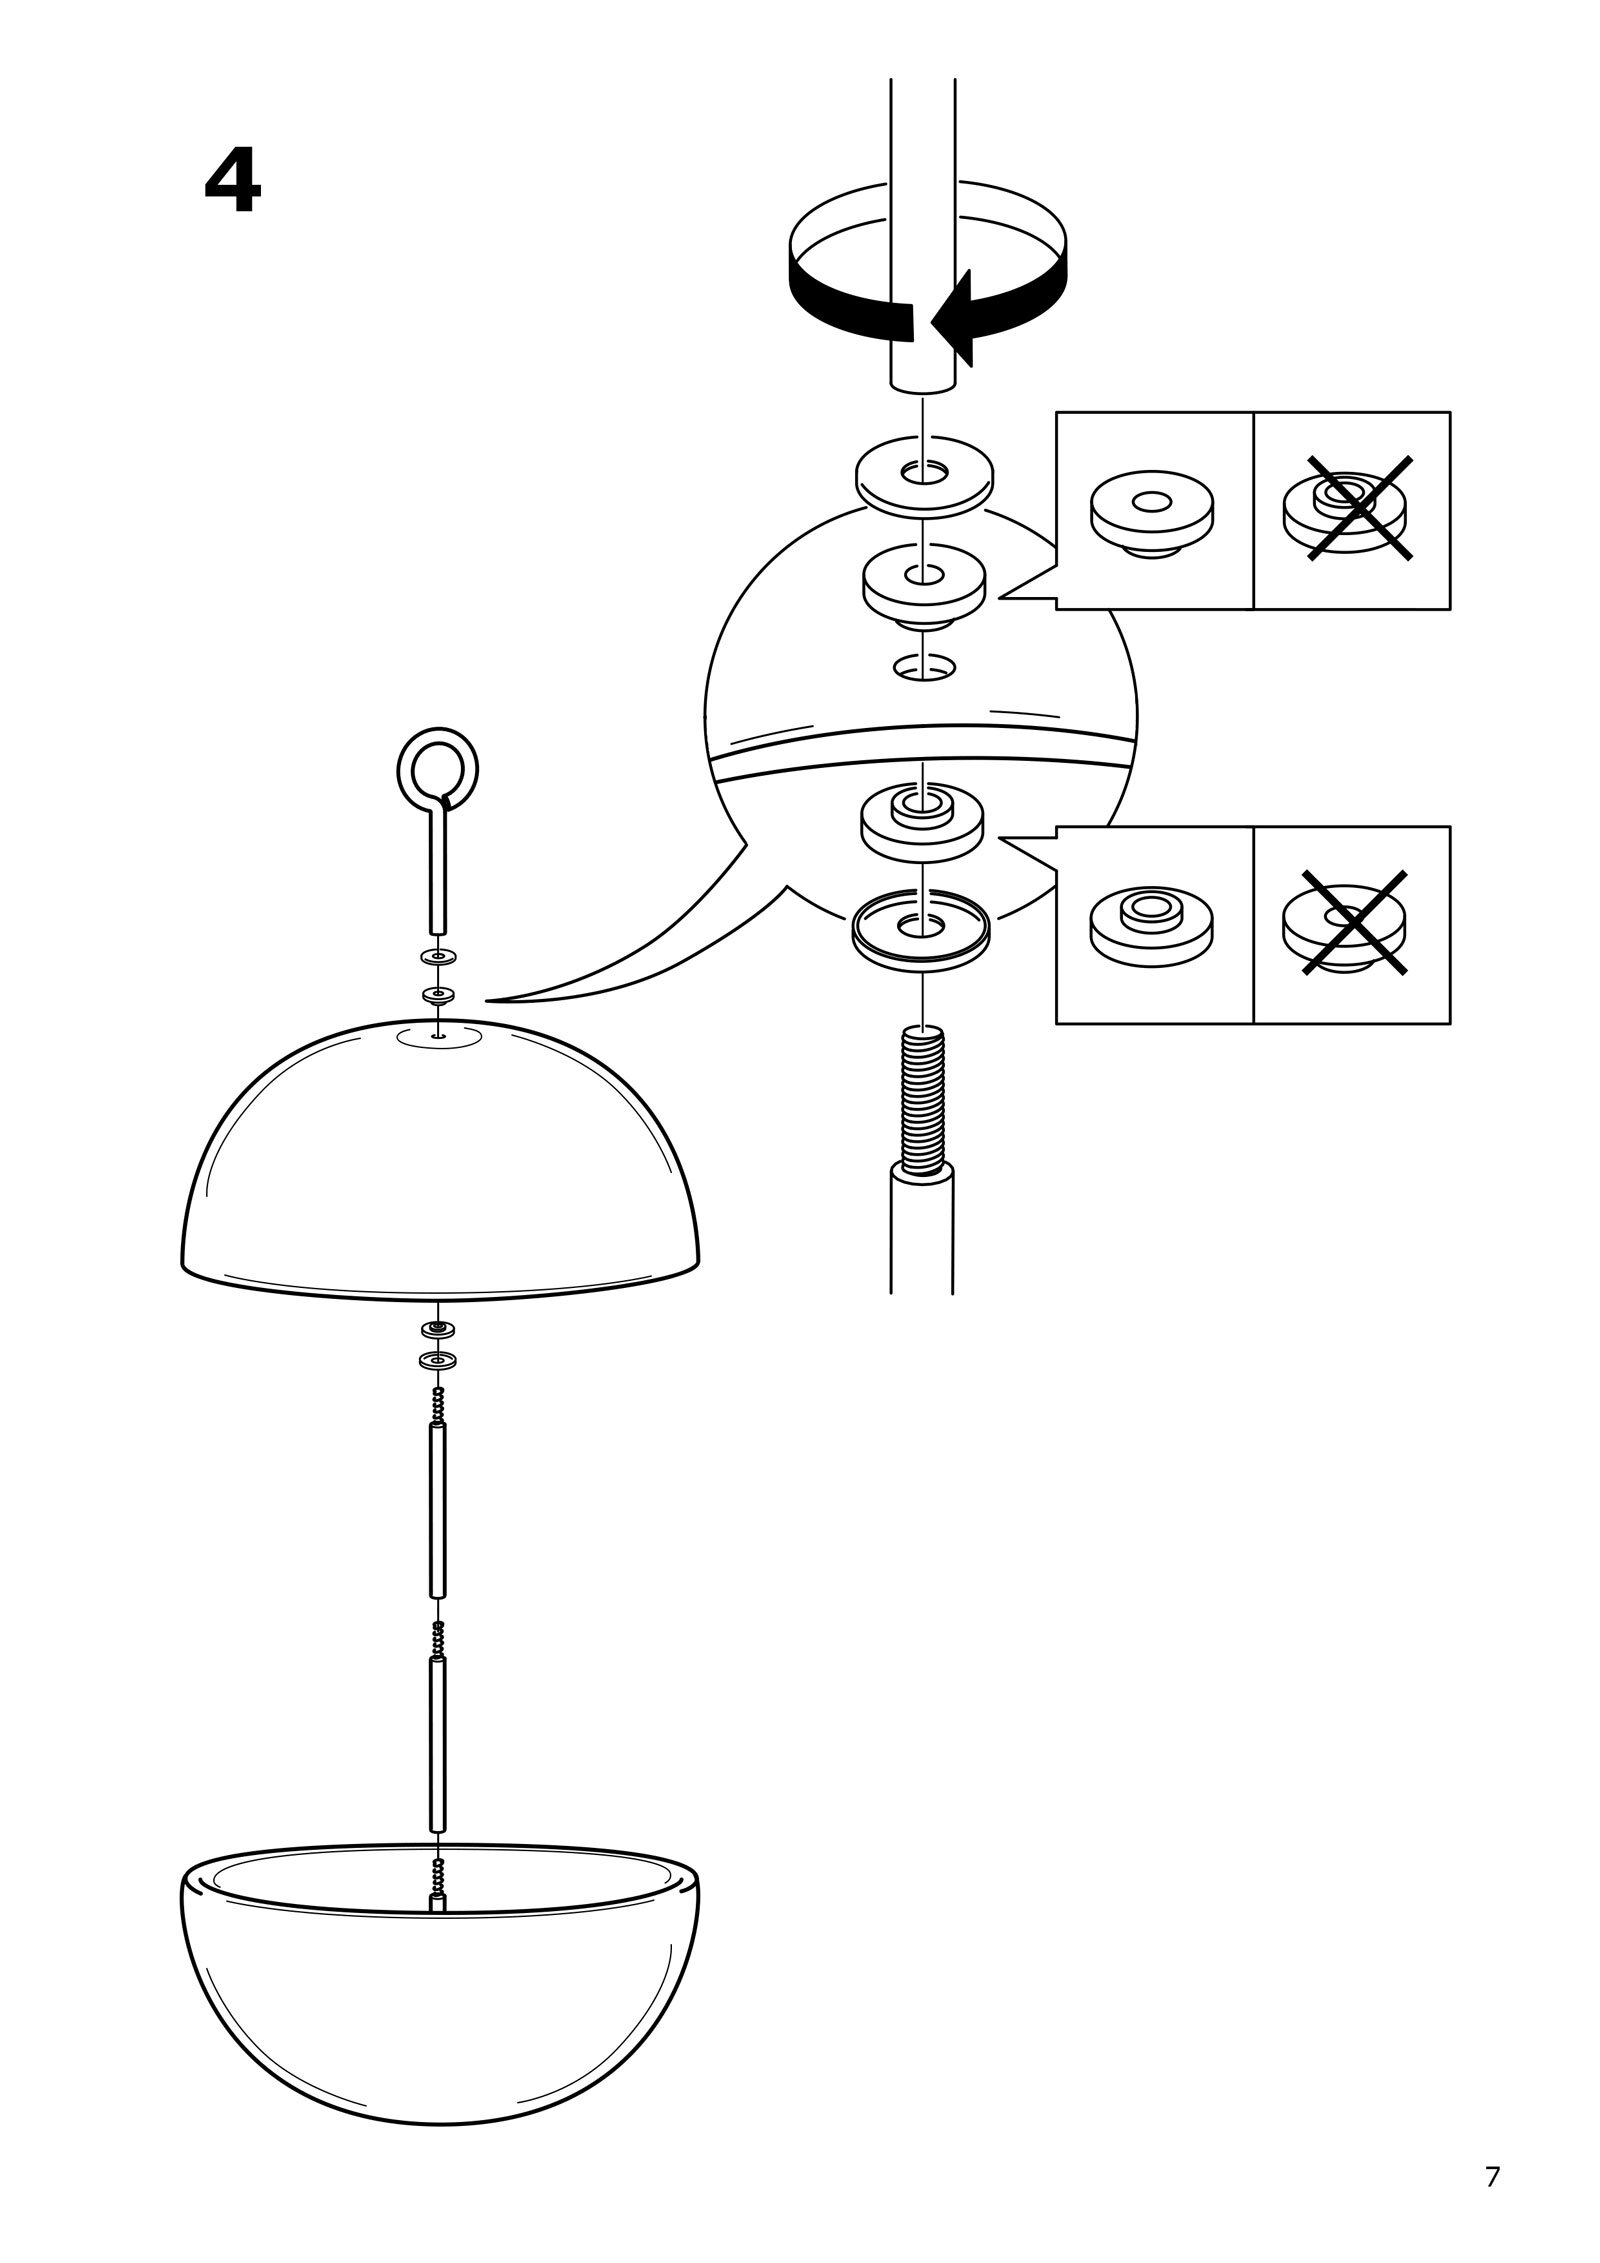 Craftr_Industrial_Design_NASTE_birdhouse_15_assembly_instructions.jpg